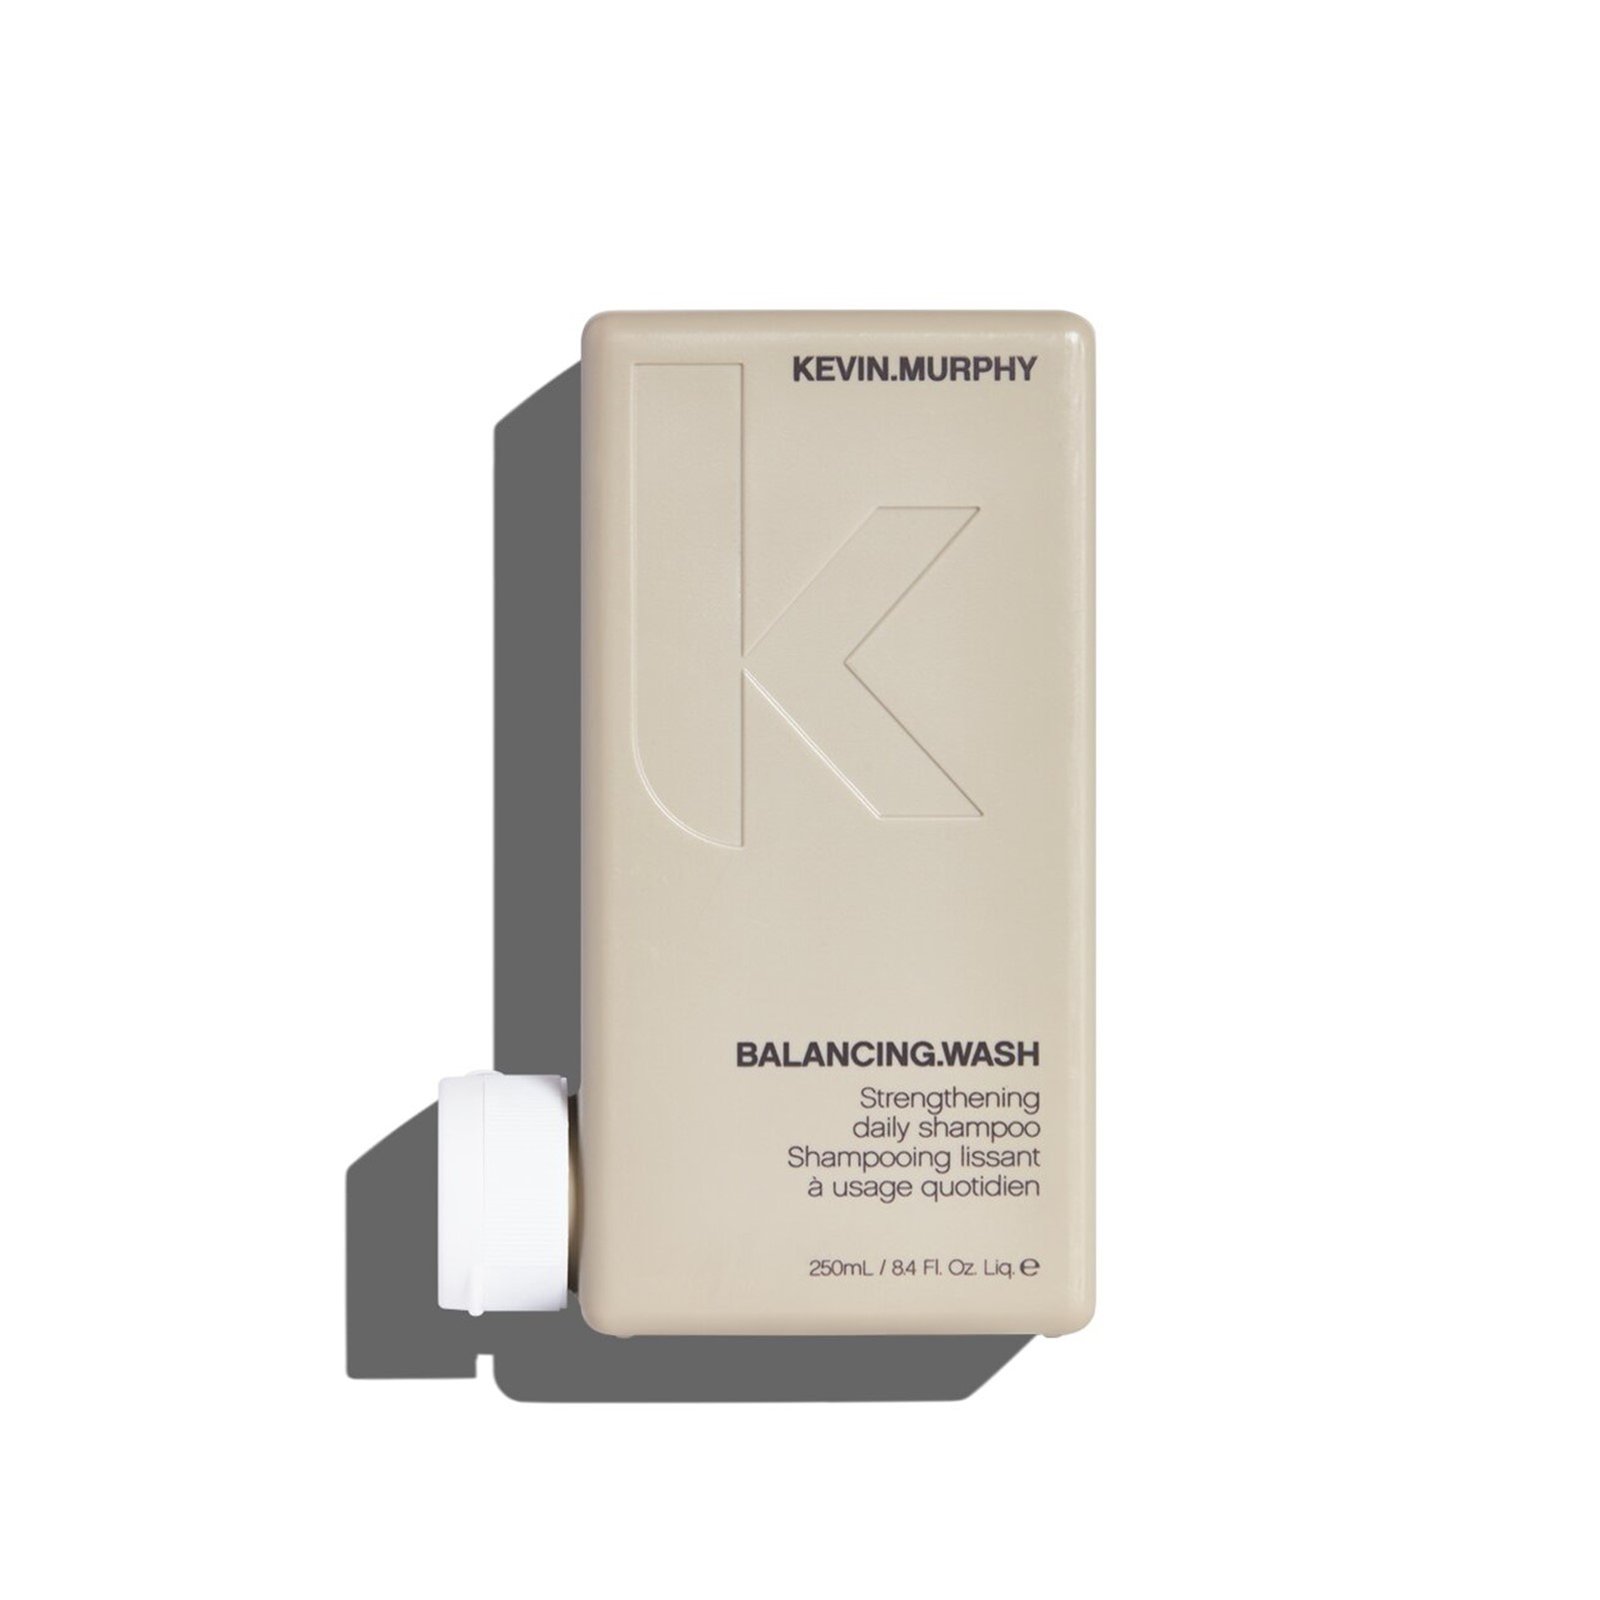 Kevin Murphy Balancing Wash Shampoo 250ml (8.4 fl oz)